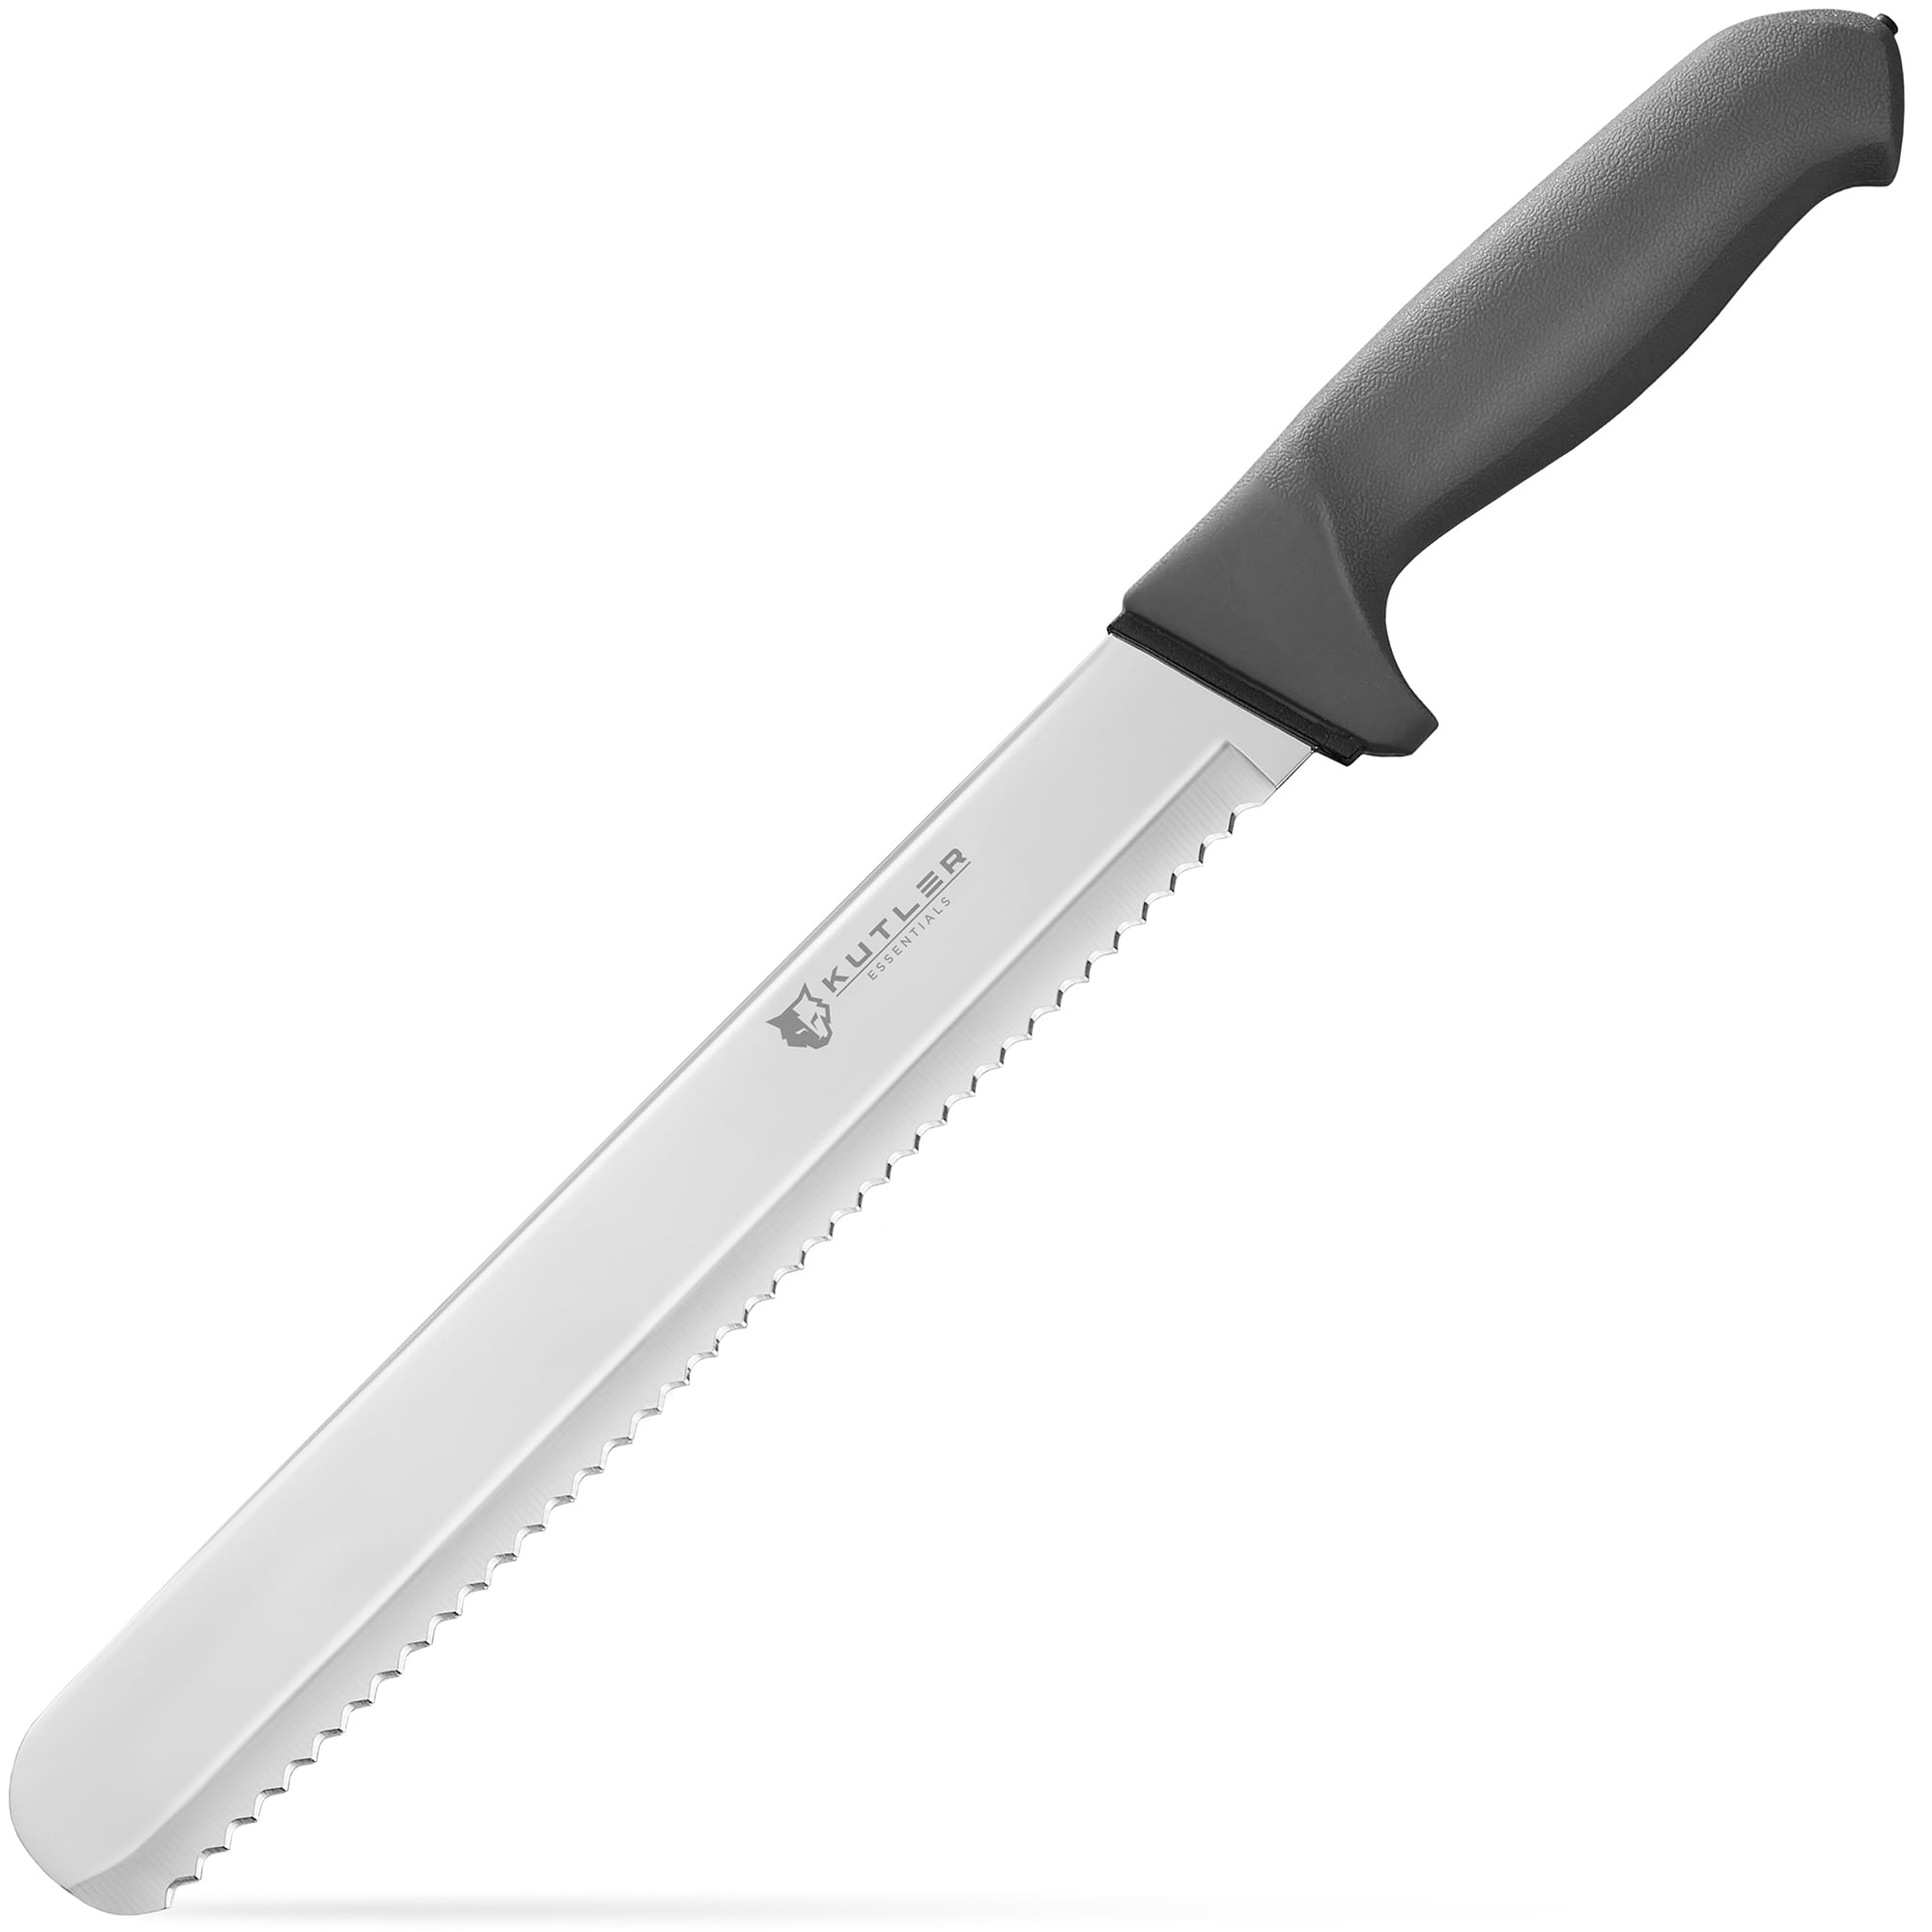 AVACRAFT Bread Knife, High Carbon German 1.4116 Stainless Steel Serrated Knife, Cake Knife, Cake Slicer, Ergonomic Wood Handle, Razor Sharp, 8 inch